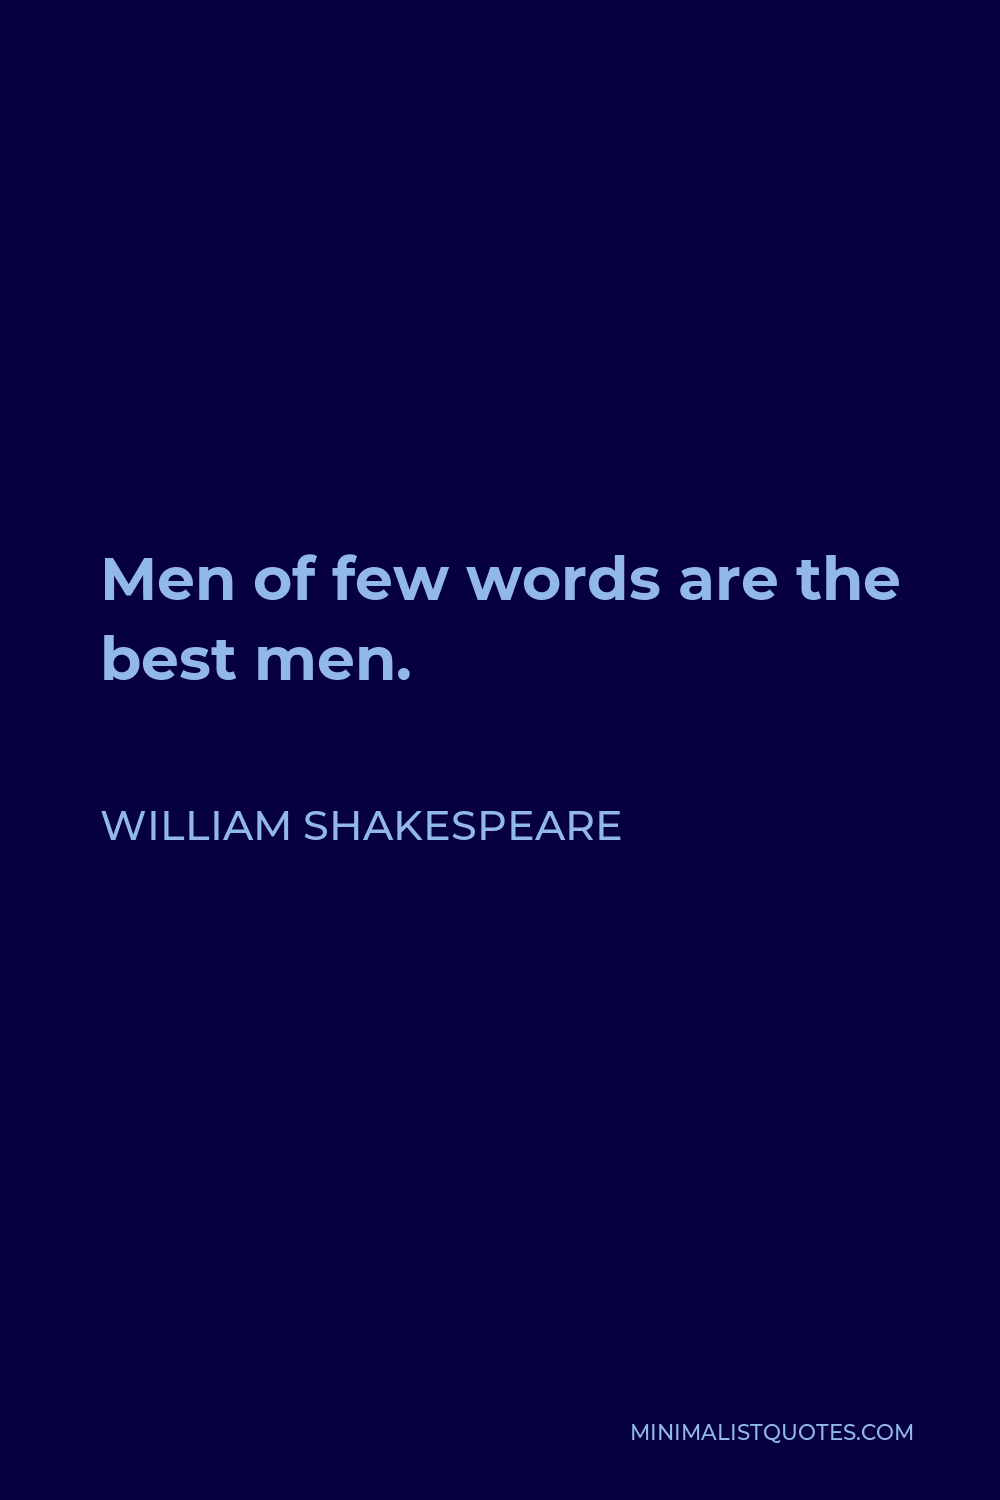 William Shakespeare Quote - Men of few words are the best men.